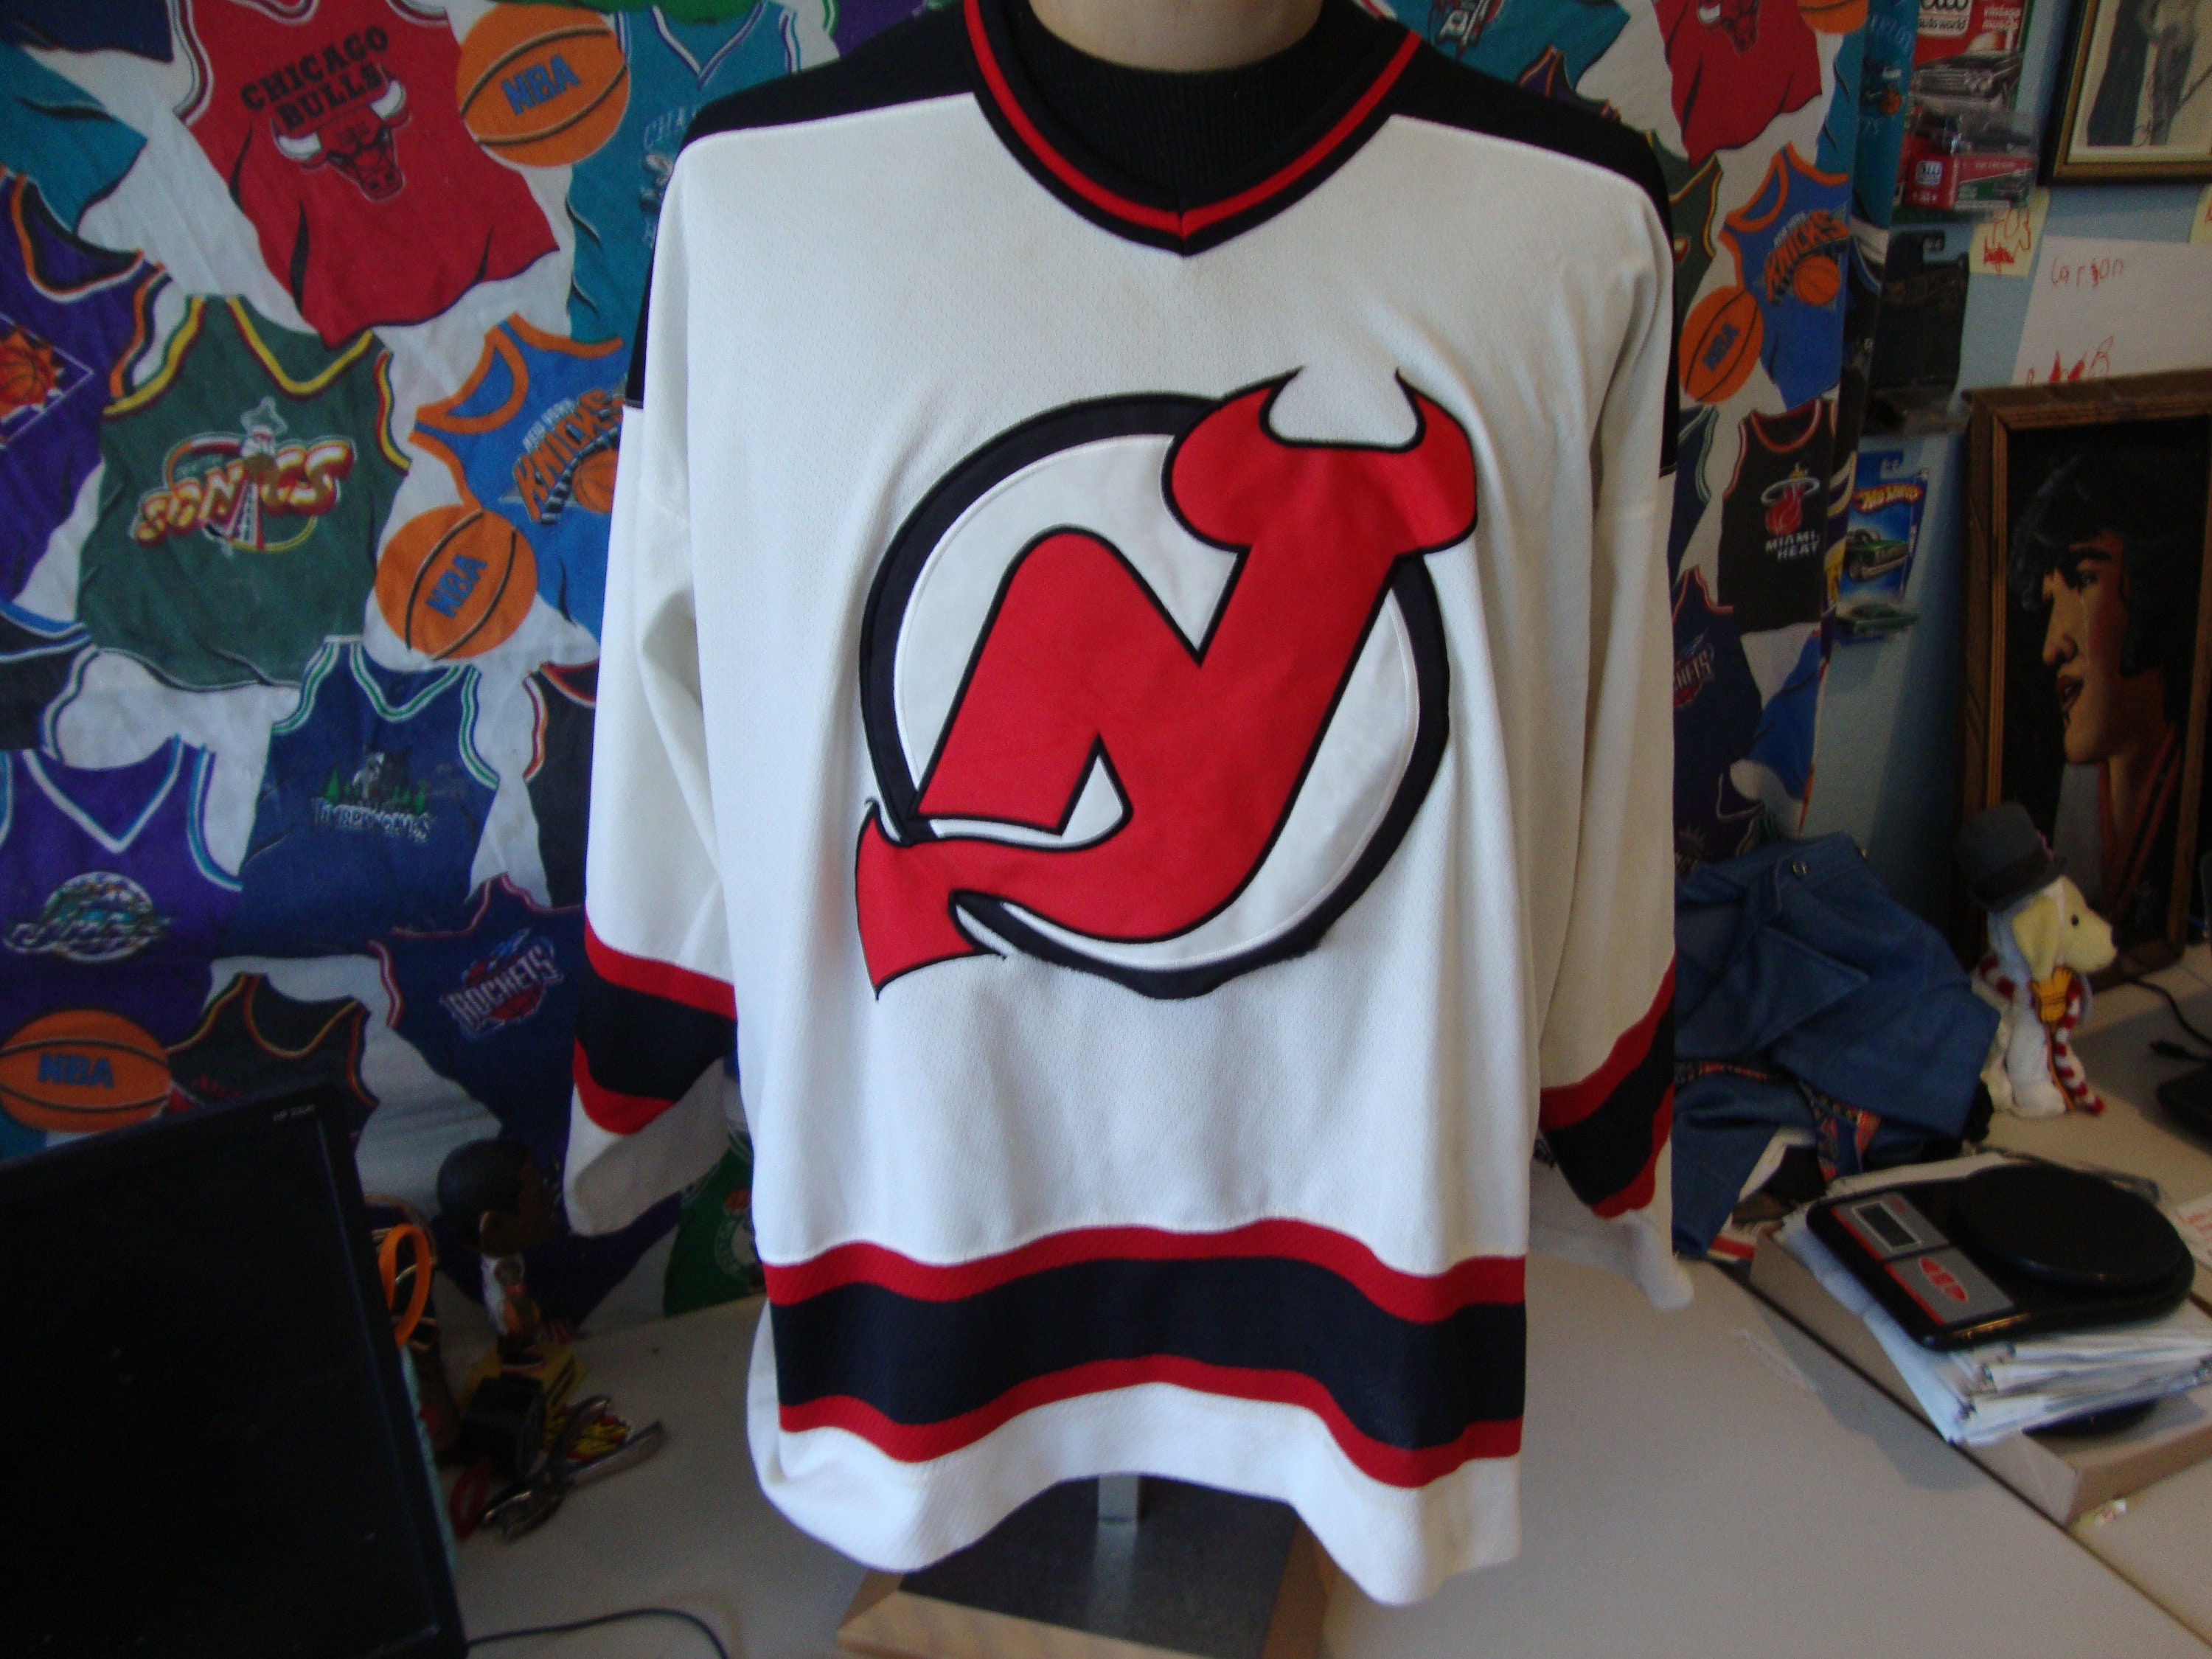 NHL New Jersey Devils Mickey Mouse Disney Hockey T Shirt Youth